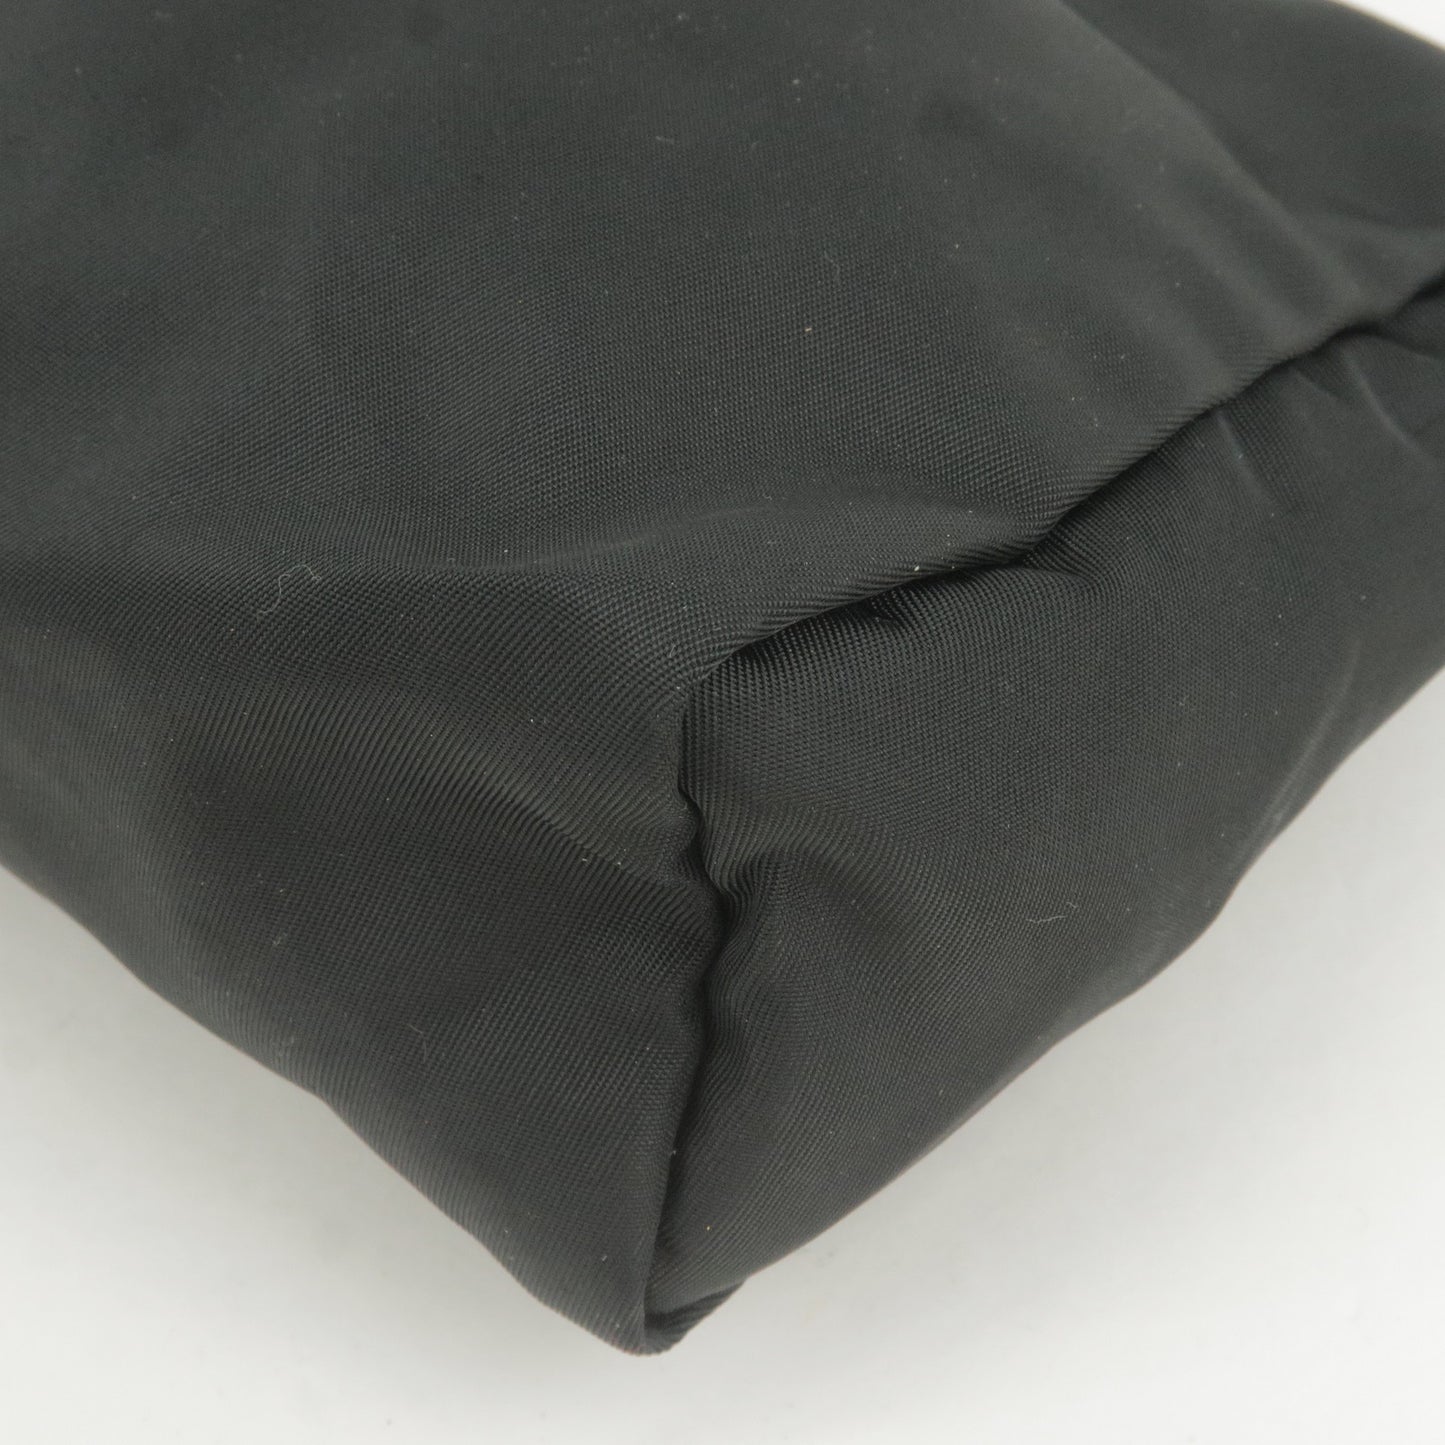 PRADA Set of 3 Logo Nylon Cosmetic Pouch Clutch Bag NERO Black